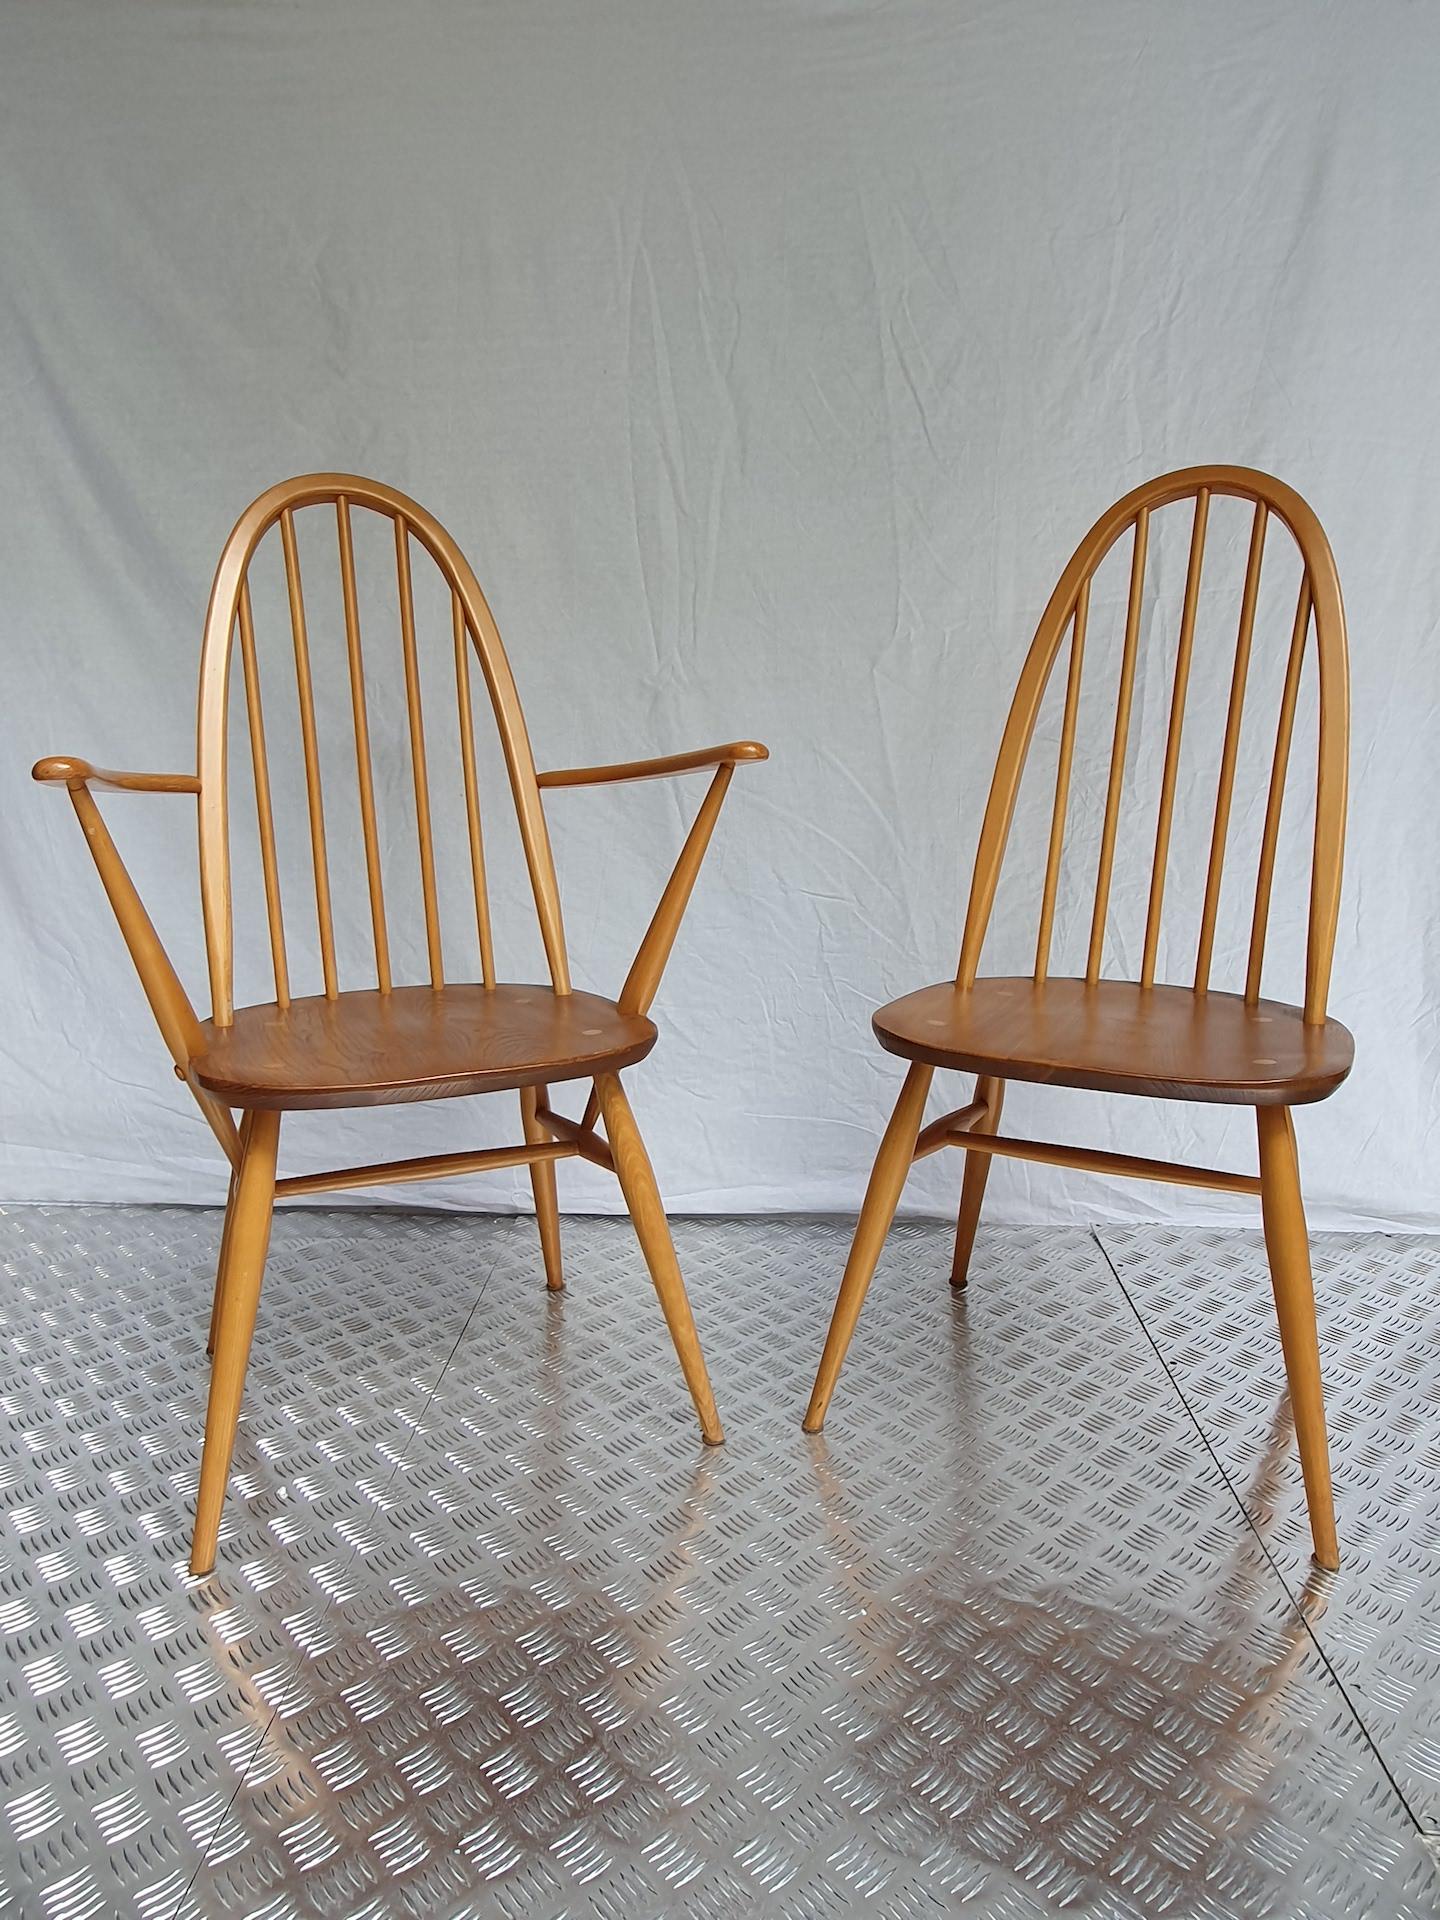 Lucian Randolph Ercolani
Ercol edition
circa 1960
Pair of armchair and windsor chair
Elm and beech

Measures: 97 x 42 x 41 cm.